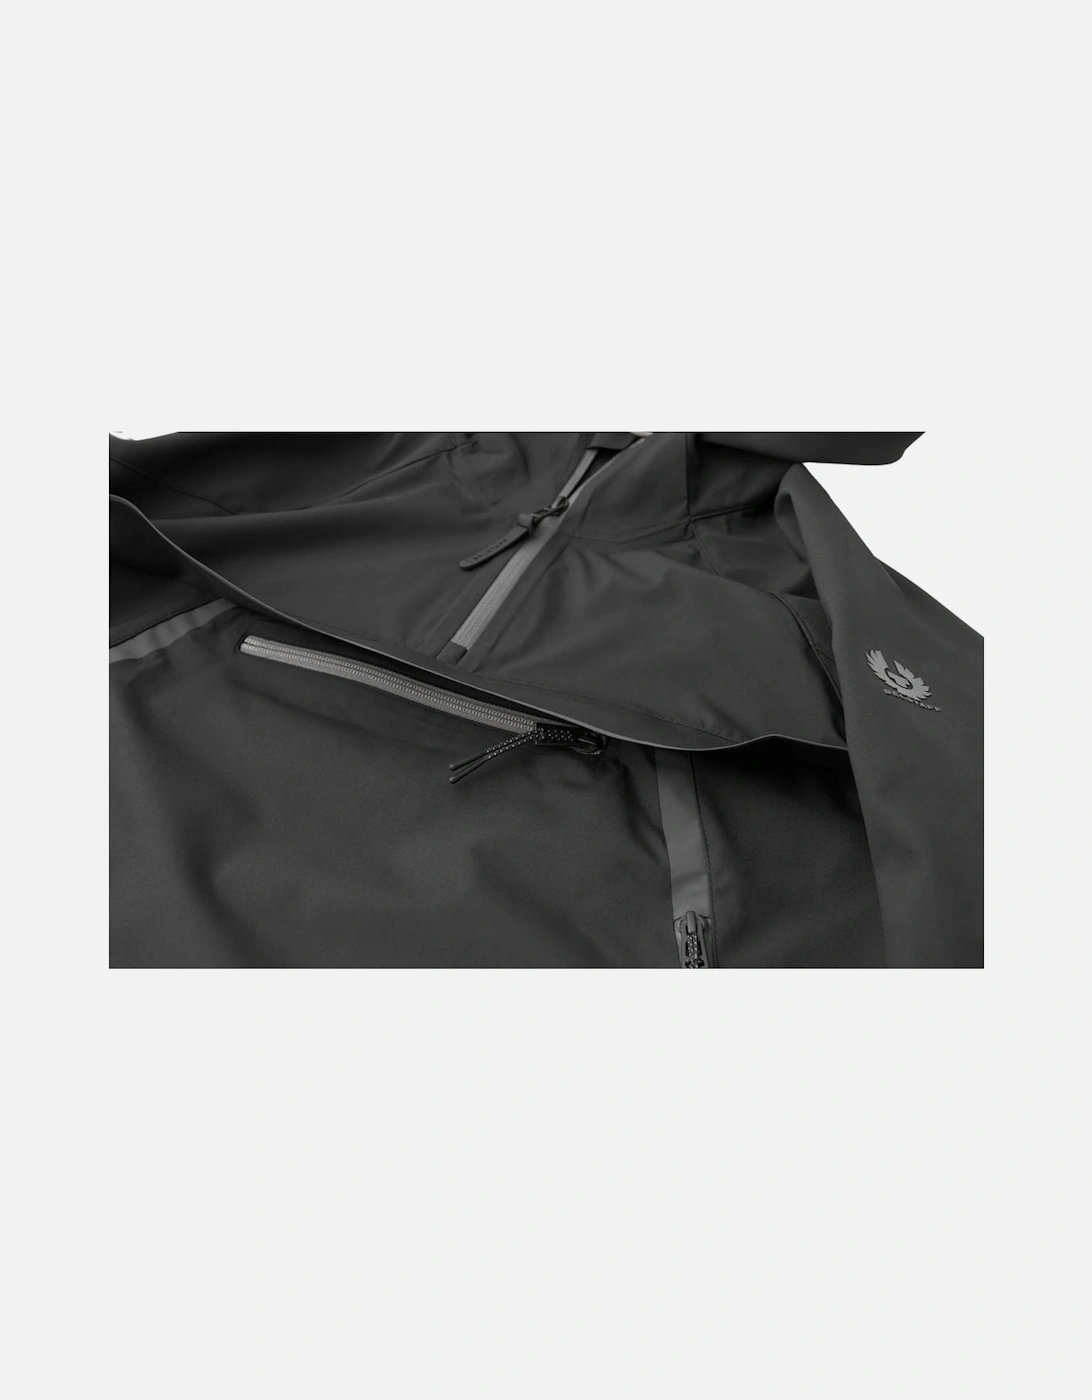 Airside Half-Zip Pullover Black Jacket